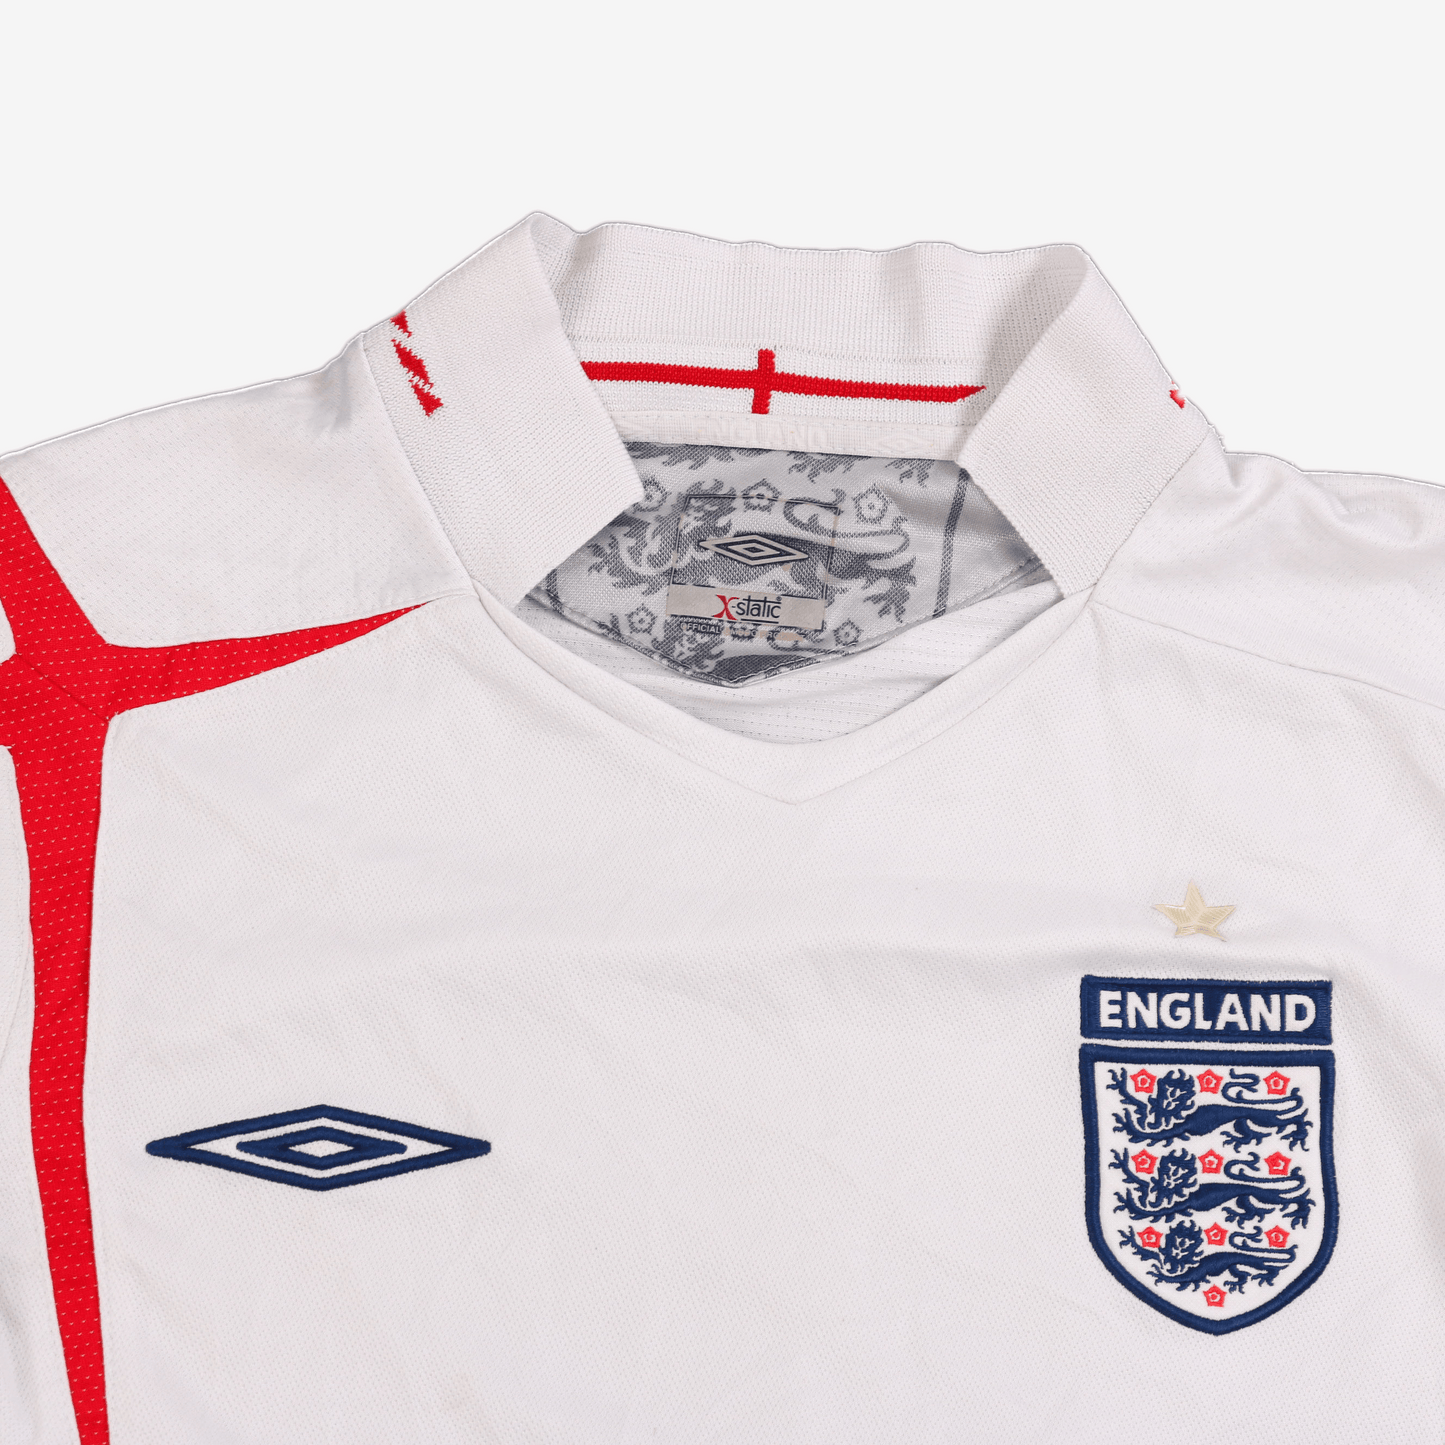 England Football Shirt 'Owen' - American Madness